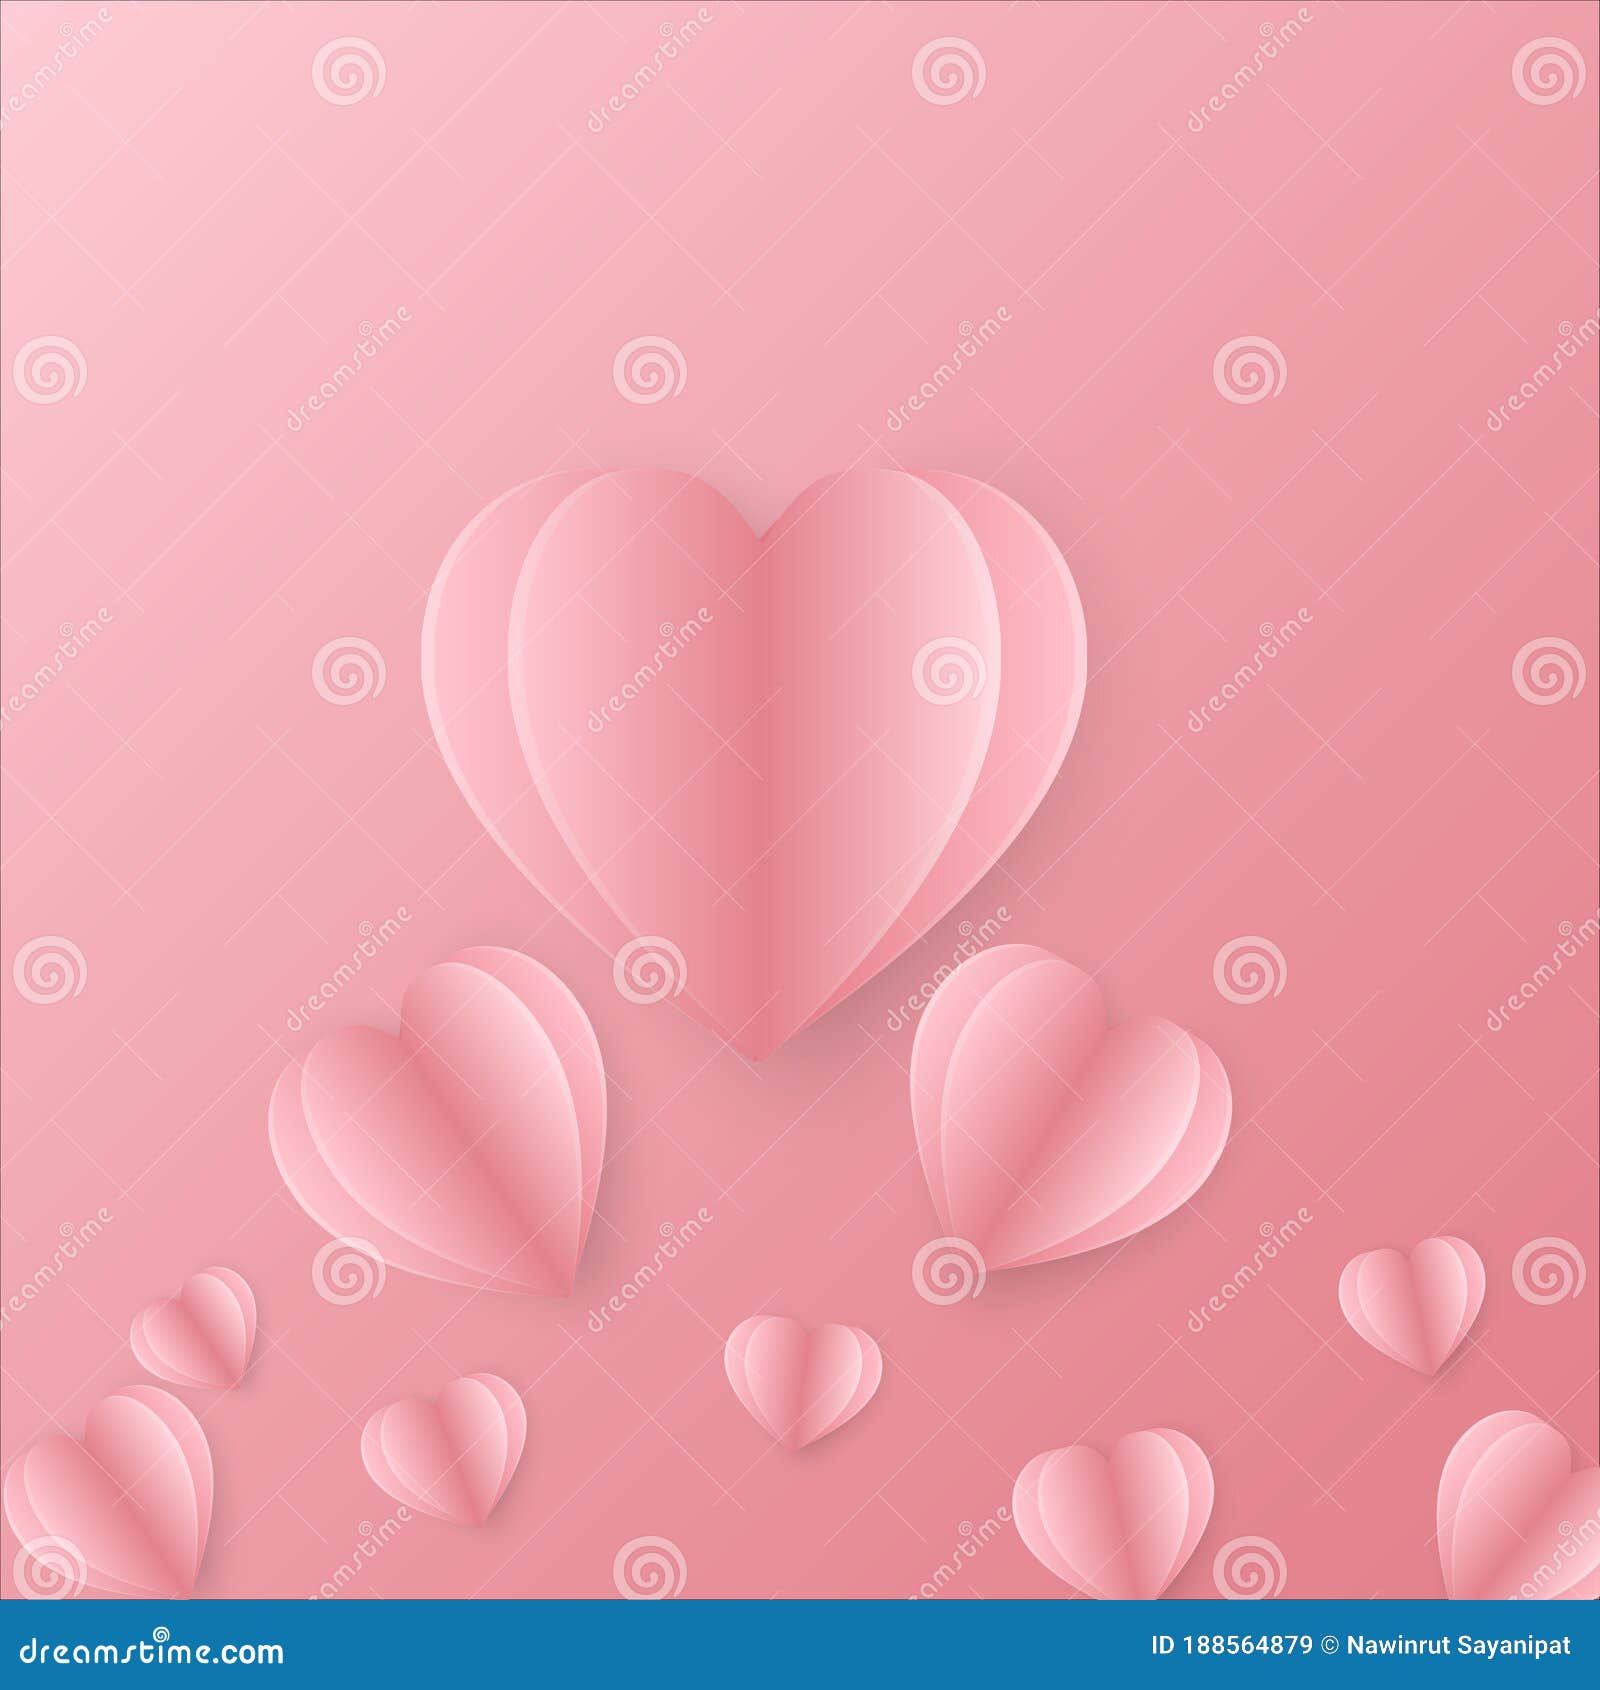 Heart Pink Background Anniversary Stock Vector - Illustration of heart ...